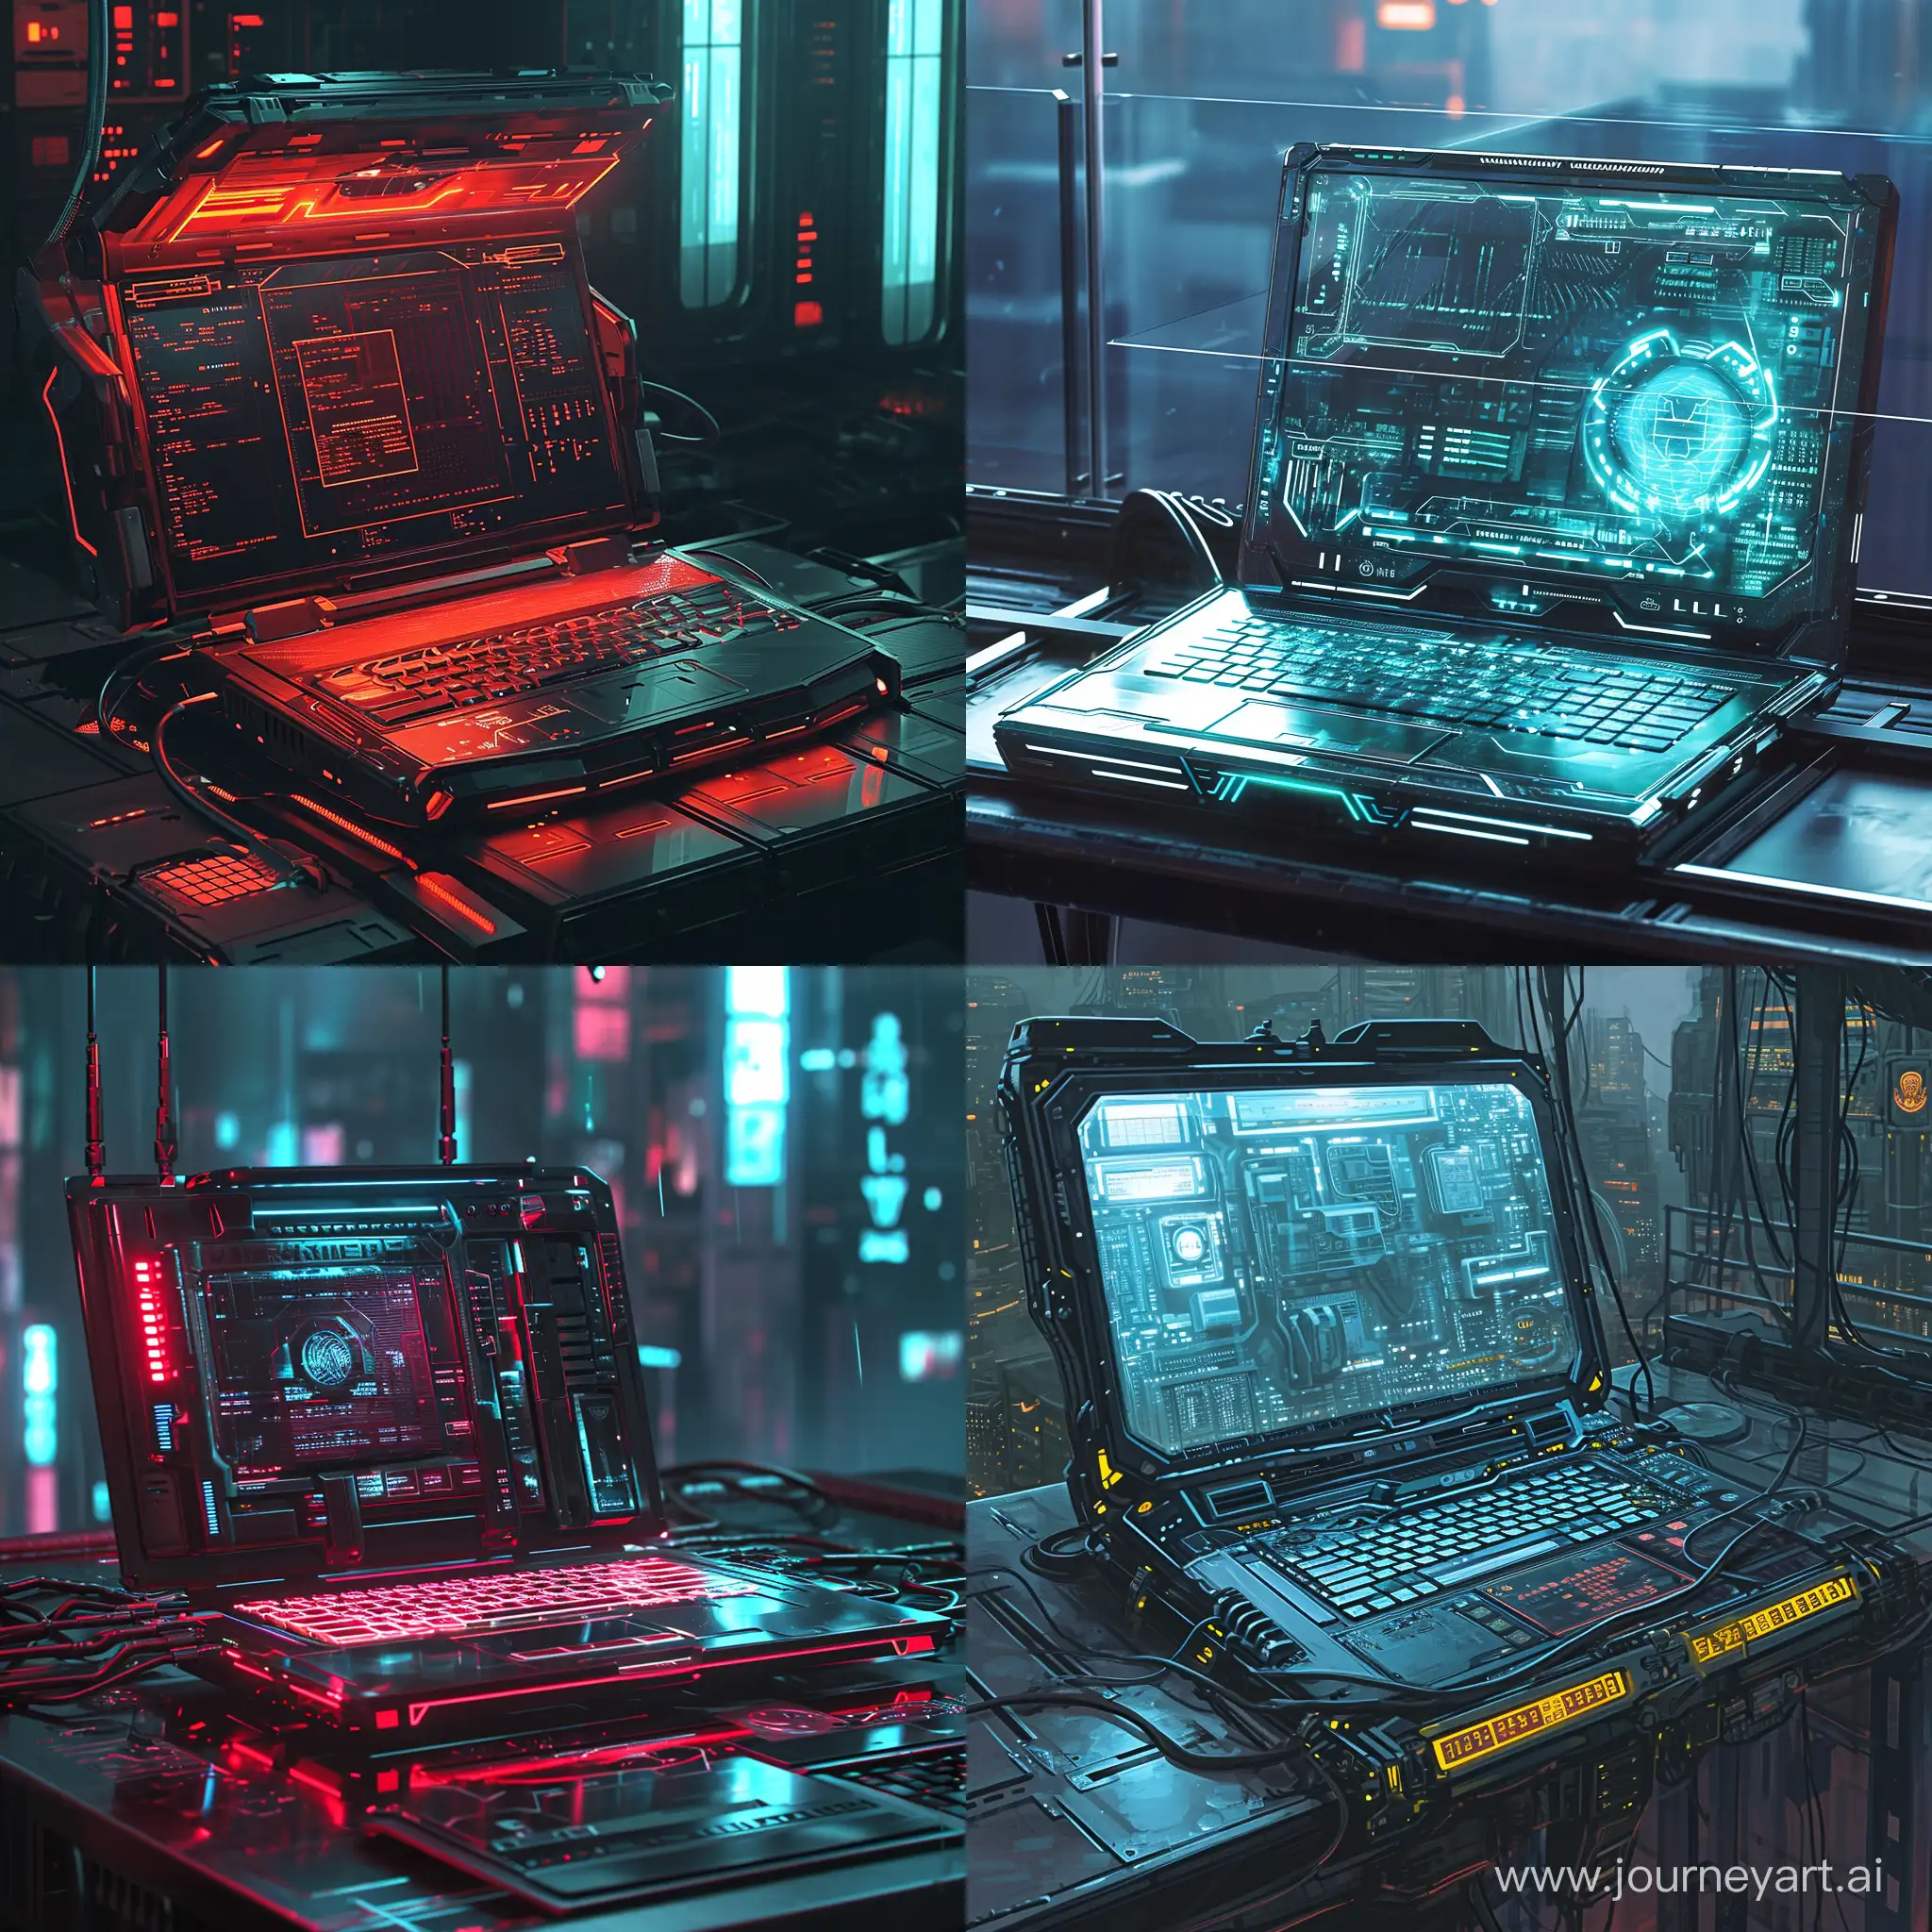 Dystopian-Biopunk-Laptop-in-a-Futuristic-Setting